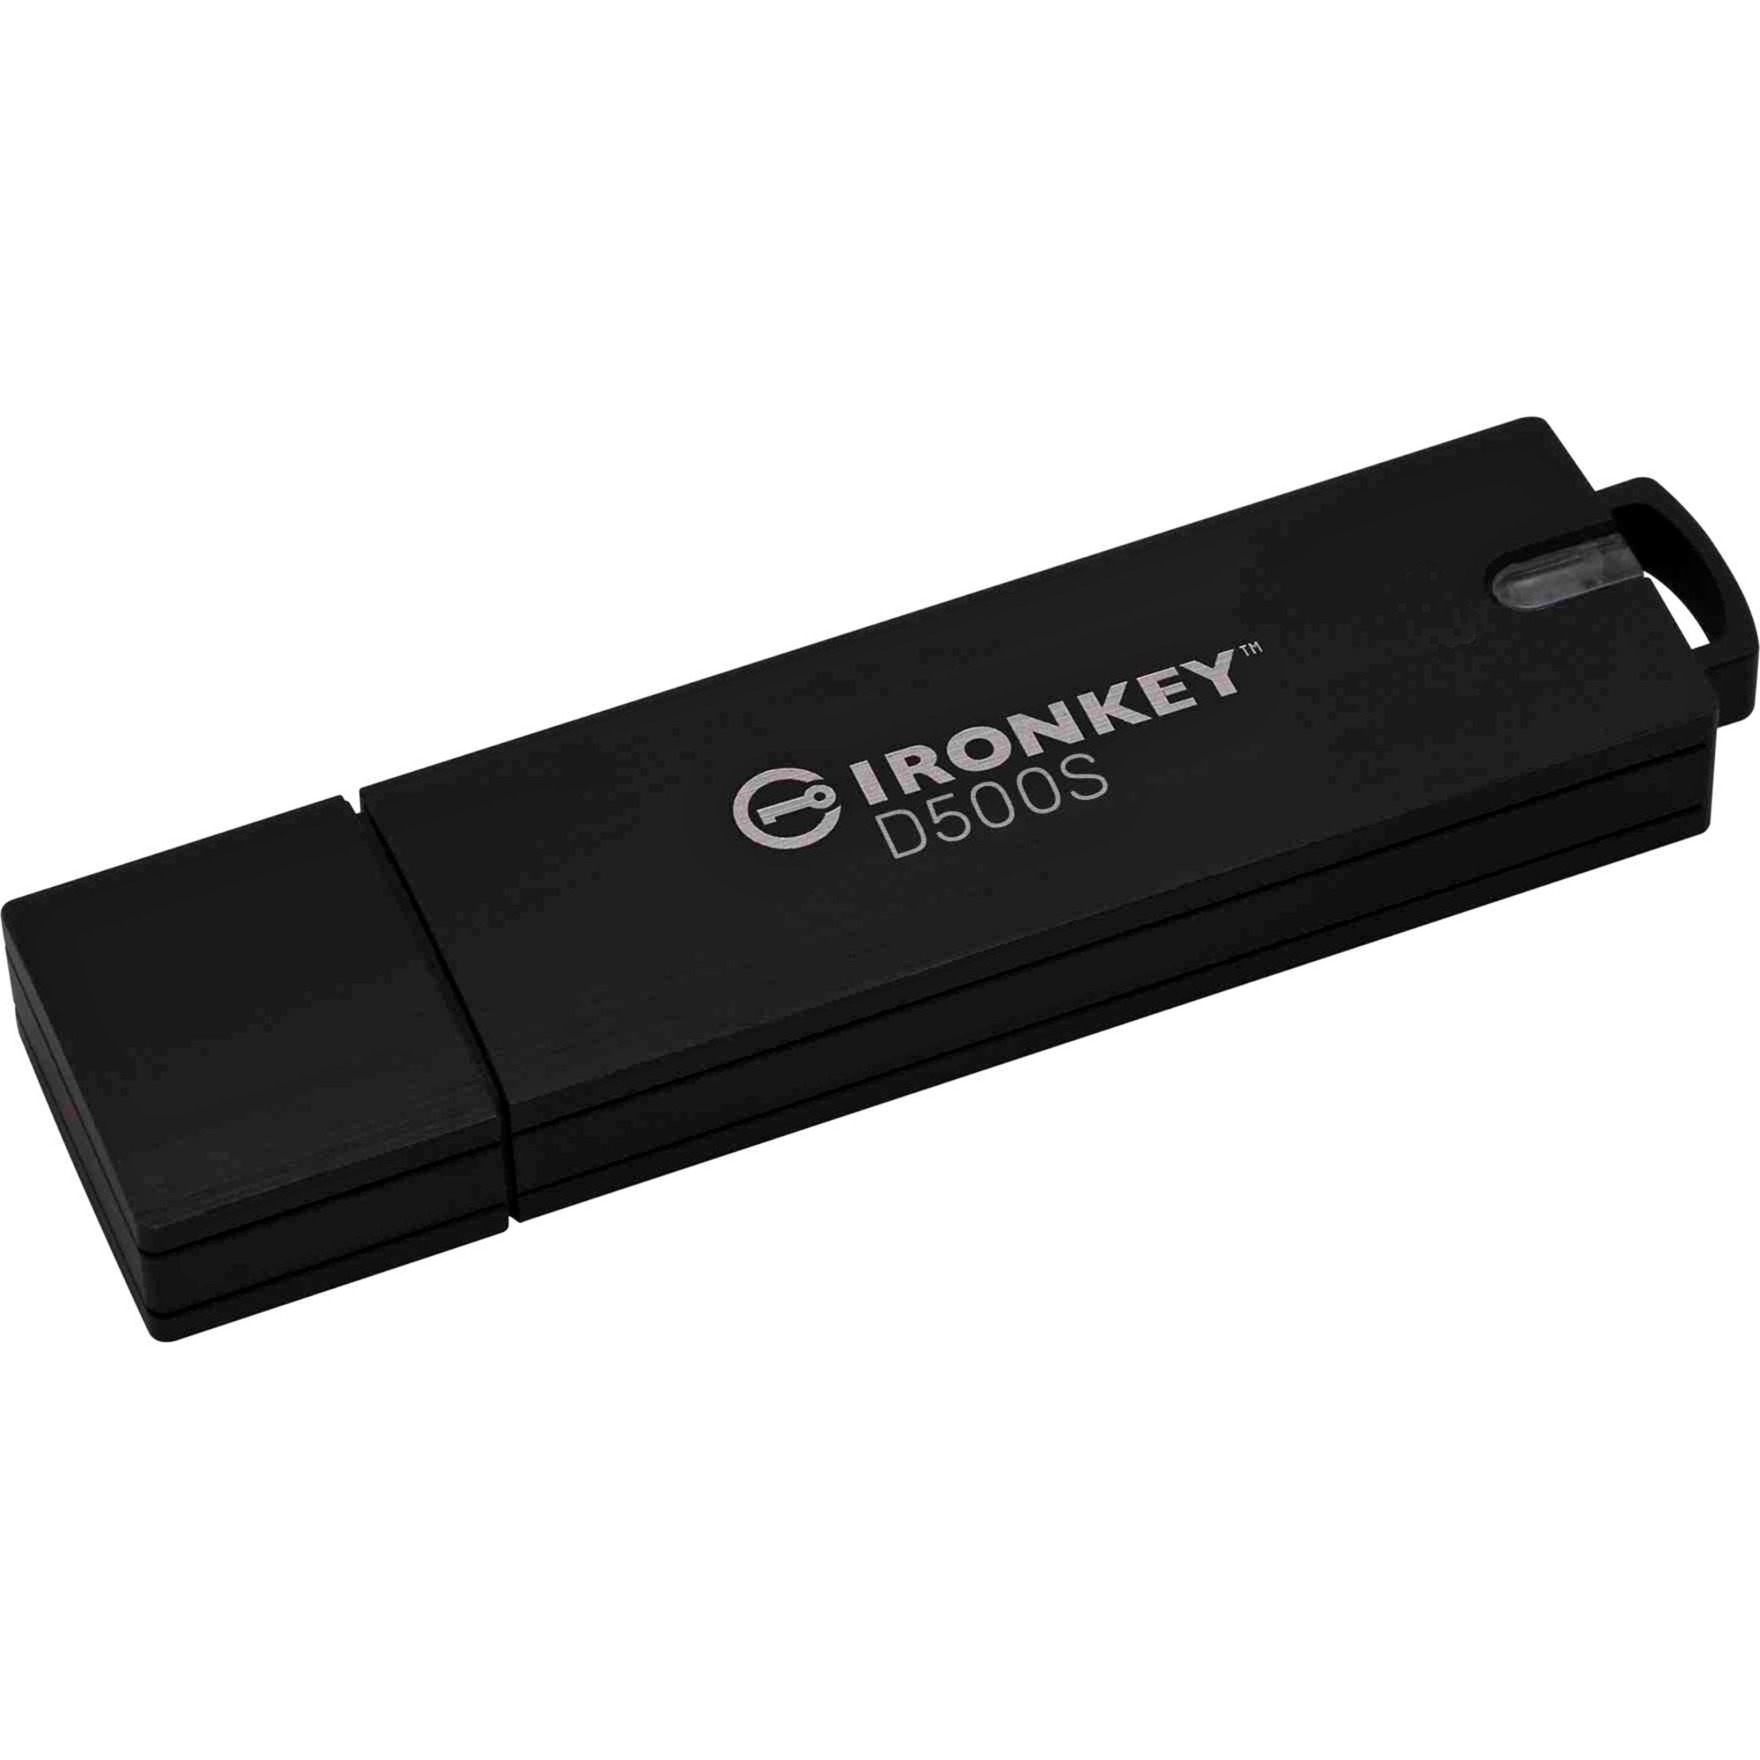 IronKey D500S 512 GB, USB-Stick von Kingston